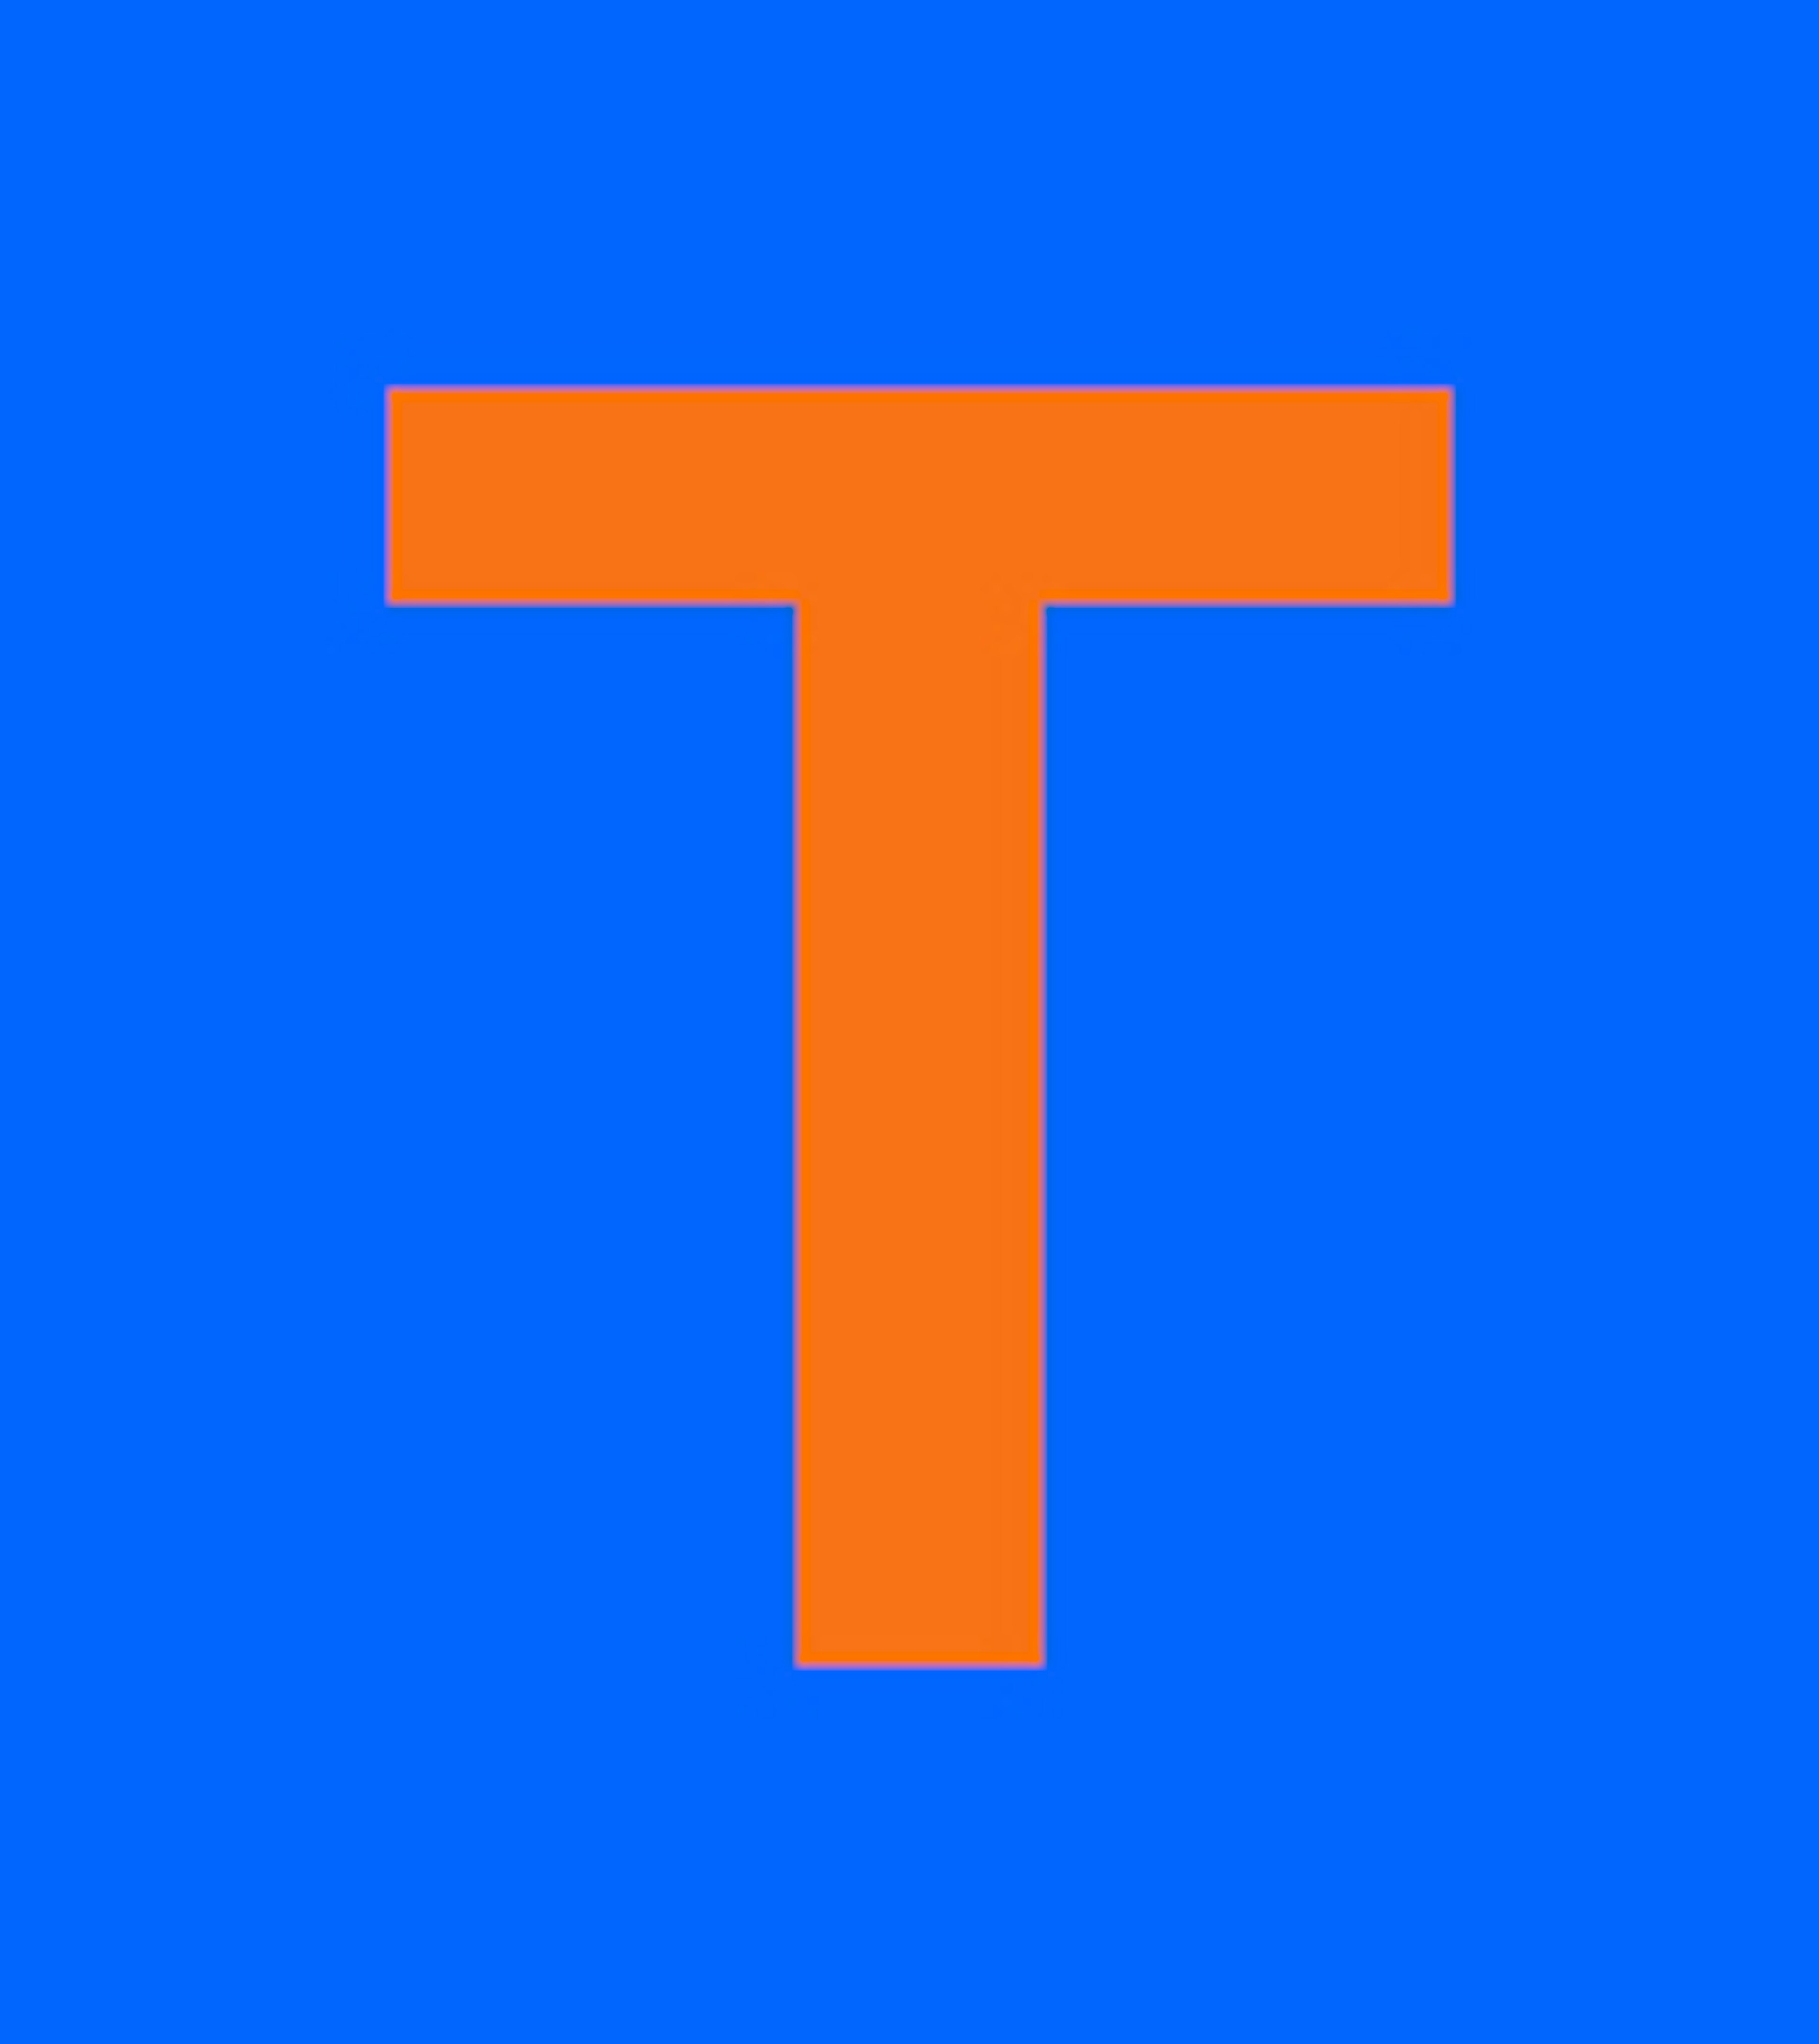 TaxCloud Logo